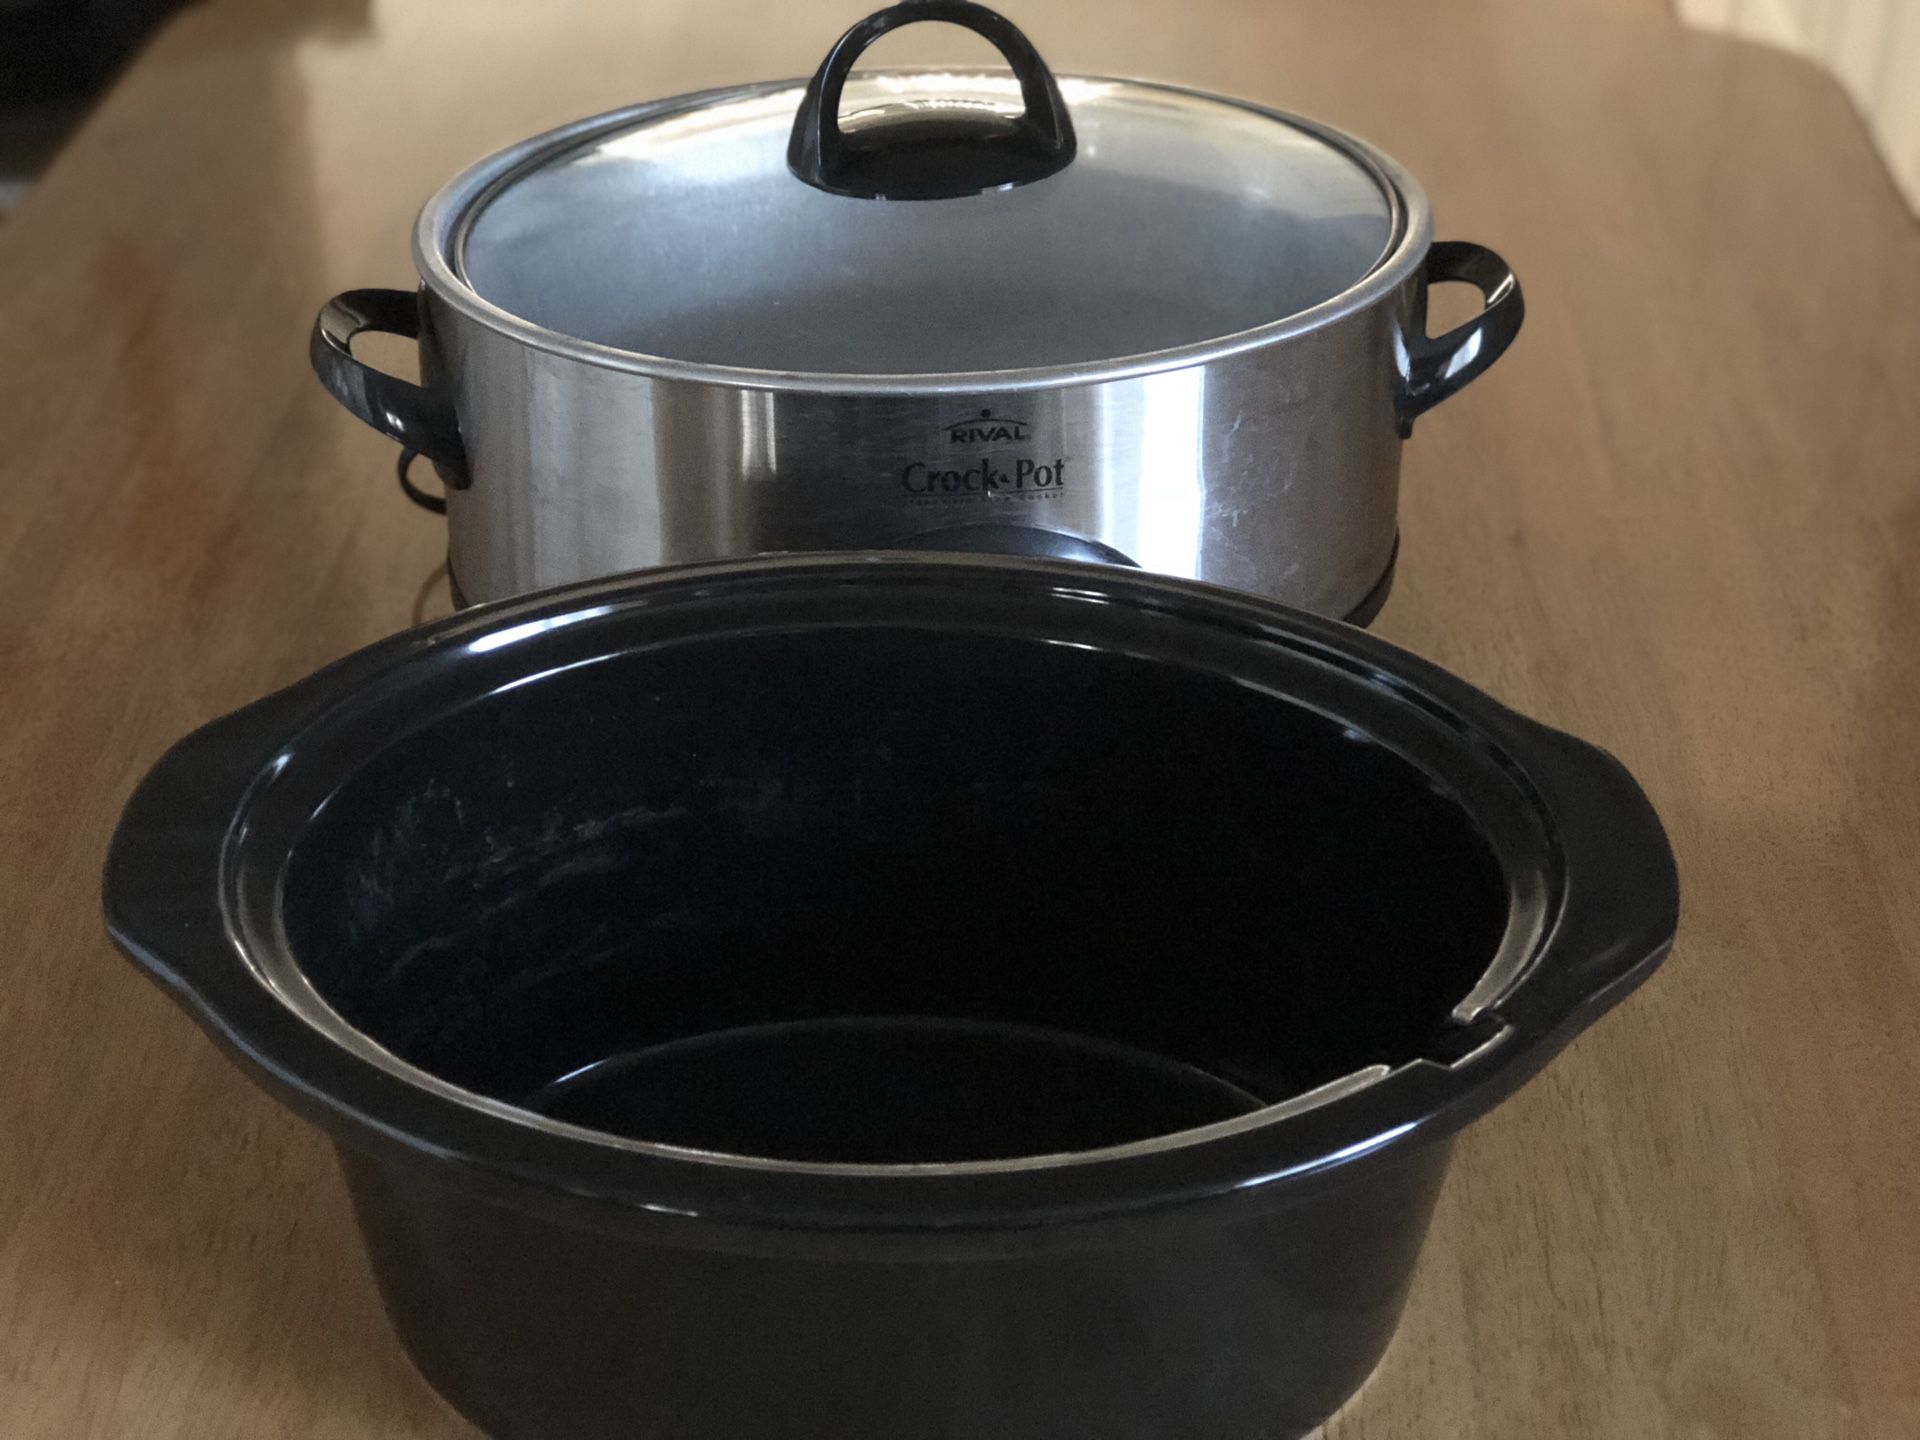 Rival Crock Pot Stoneware Slow Cooker SCVP609 for Sale in Galveston, TX -  OfferUp